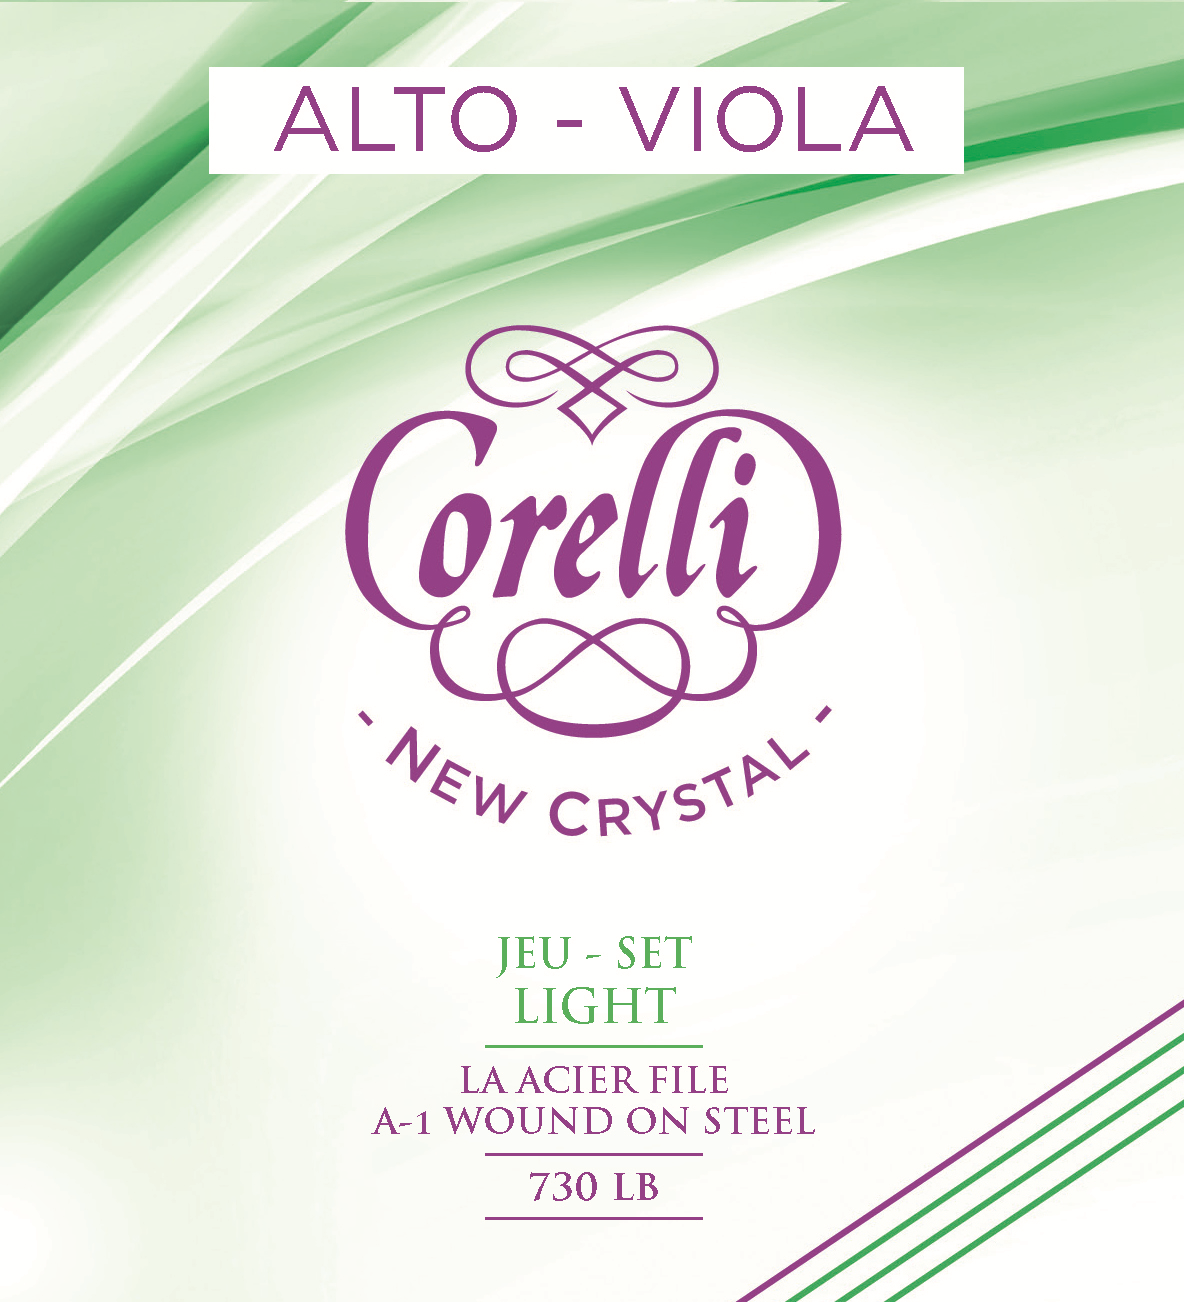 CORELLI NEW CRYSTAL LIGHT 730LB ALTO